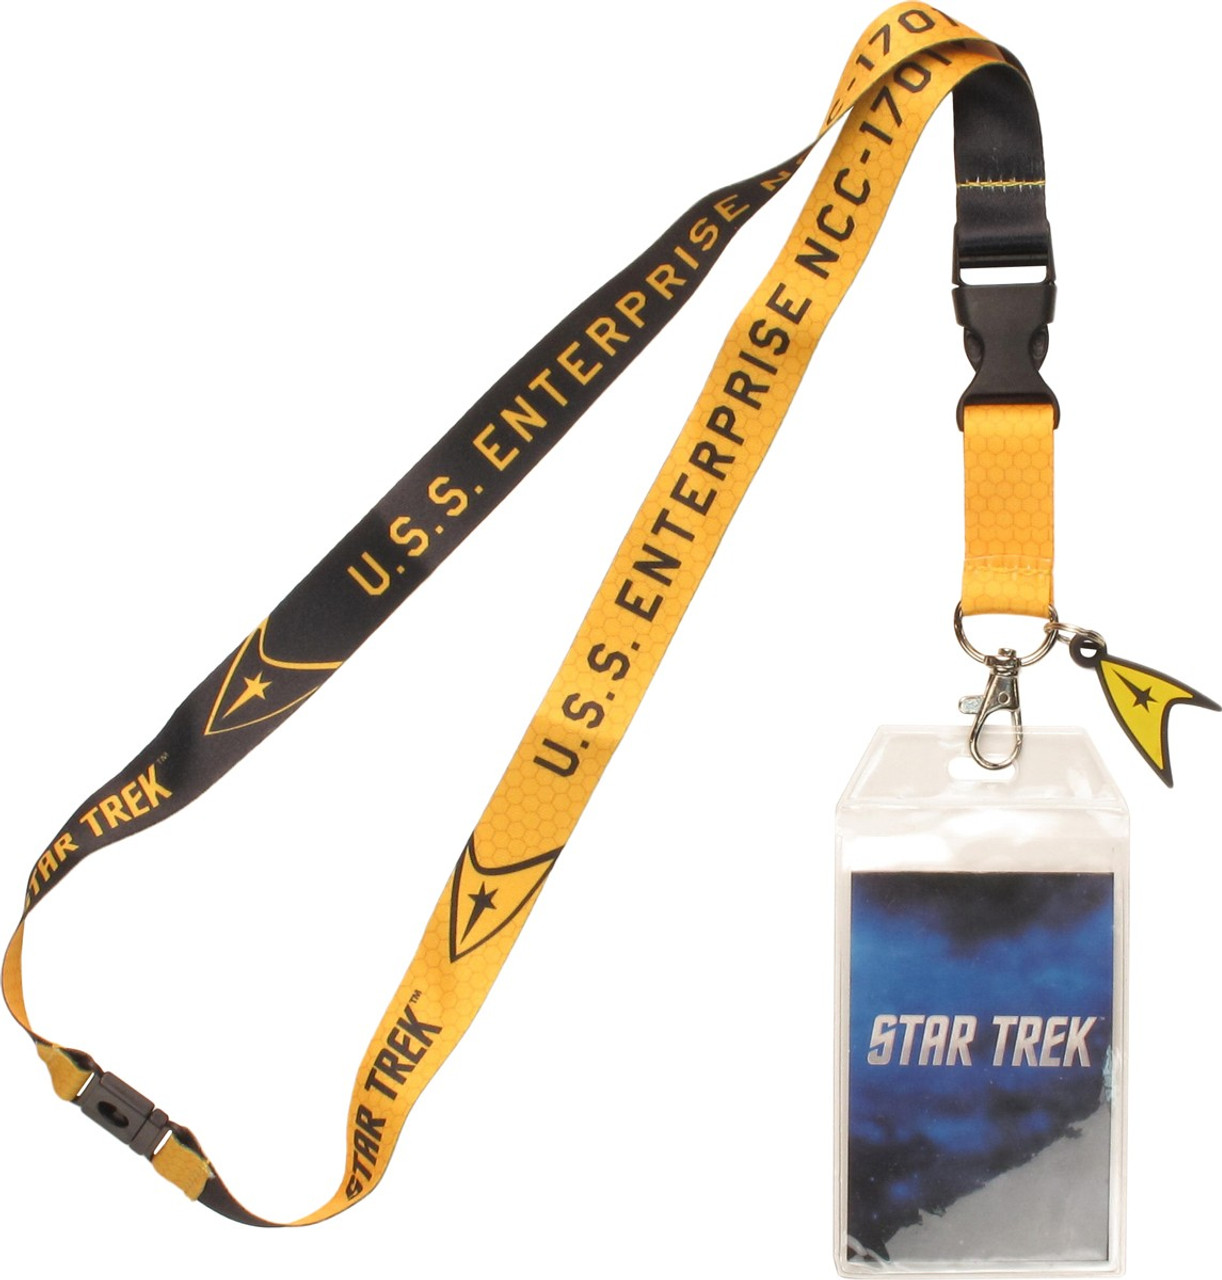 Star Trek Yellow U.S.S Enterprise Lanyard with ID Holder & Charm New 